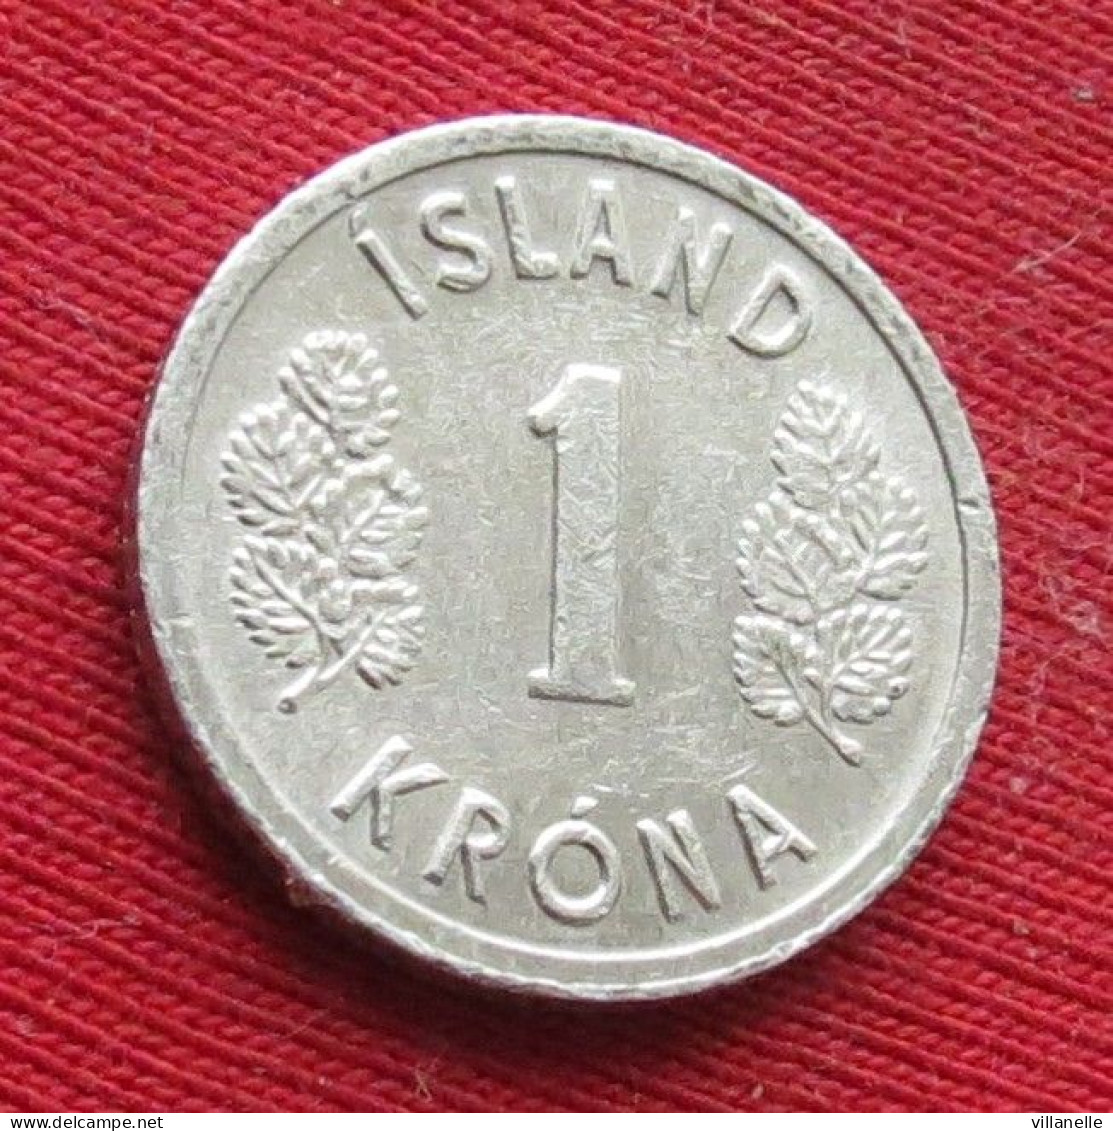 Iceland  1 Krona 1980  Islandia Islande Island Ijsland W ºº - Islandia